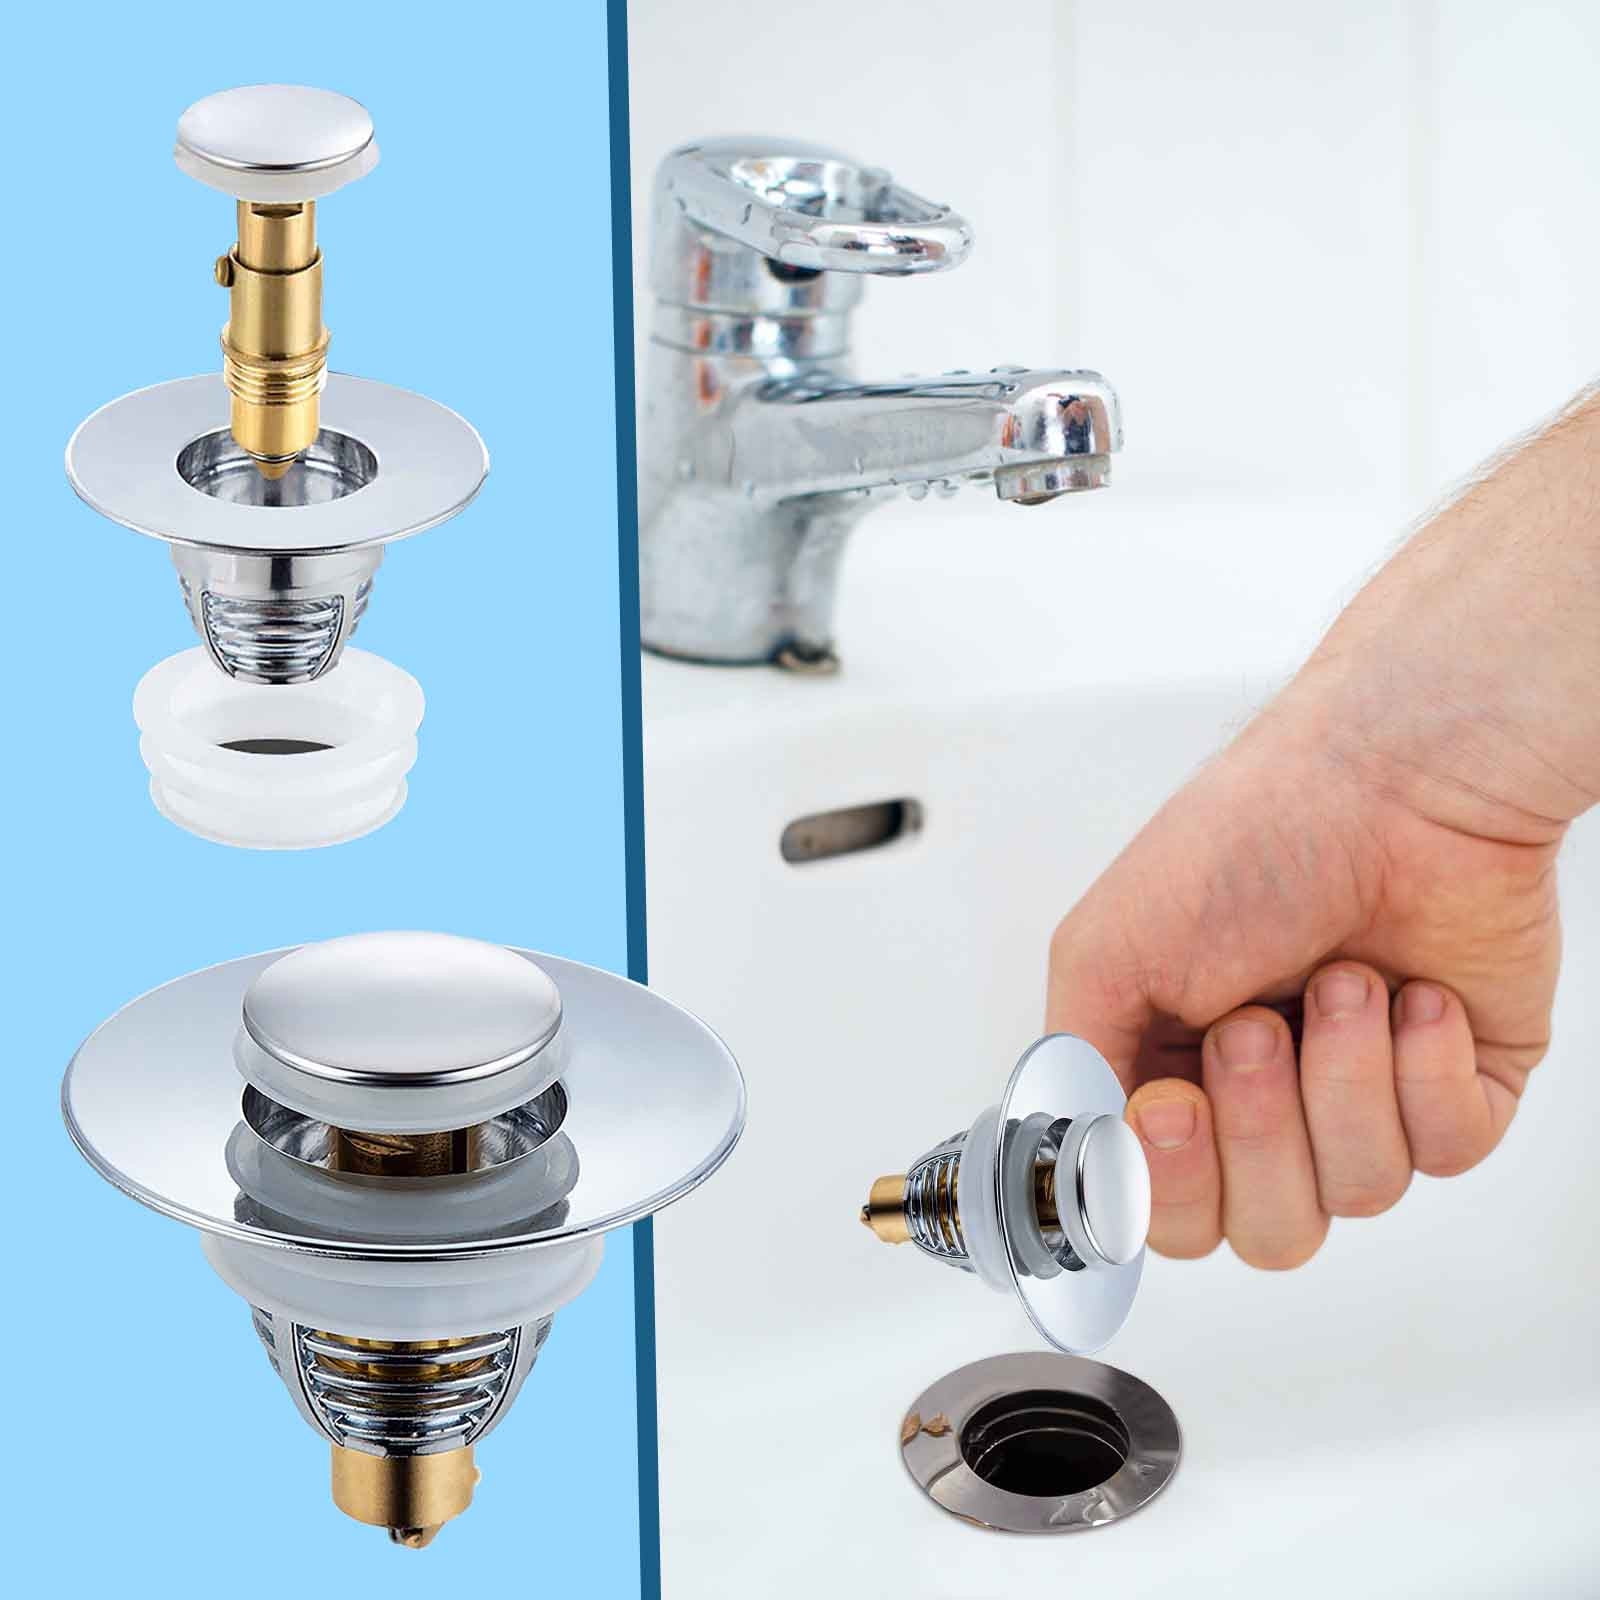 WeGuard Upgraded Universal Bathroom Sink Stopper Fits 1 1/4 inch